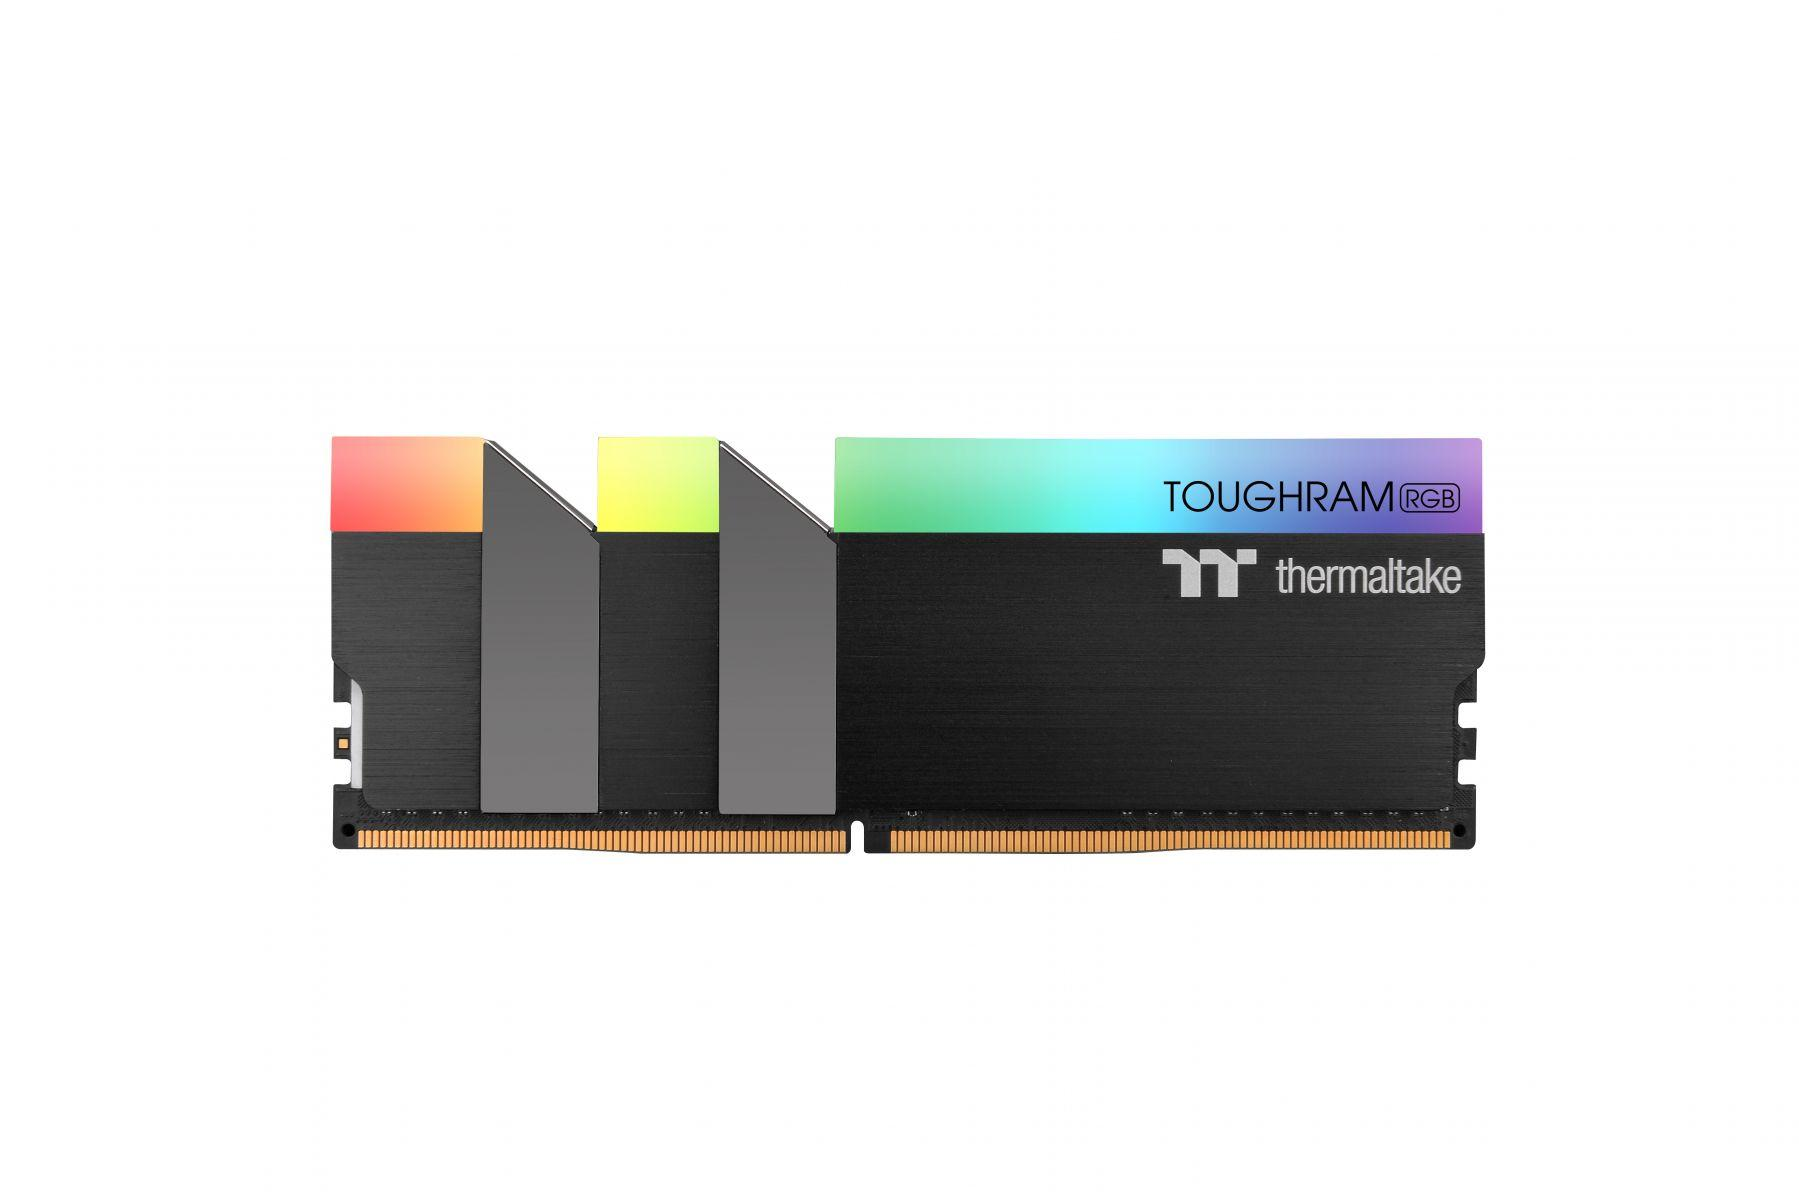 TOUGHRAM GB RGB THERMALTAKE 16 DDR4 Arbeitsspeicher